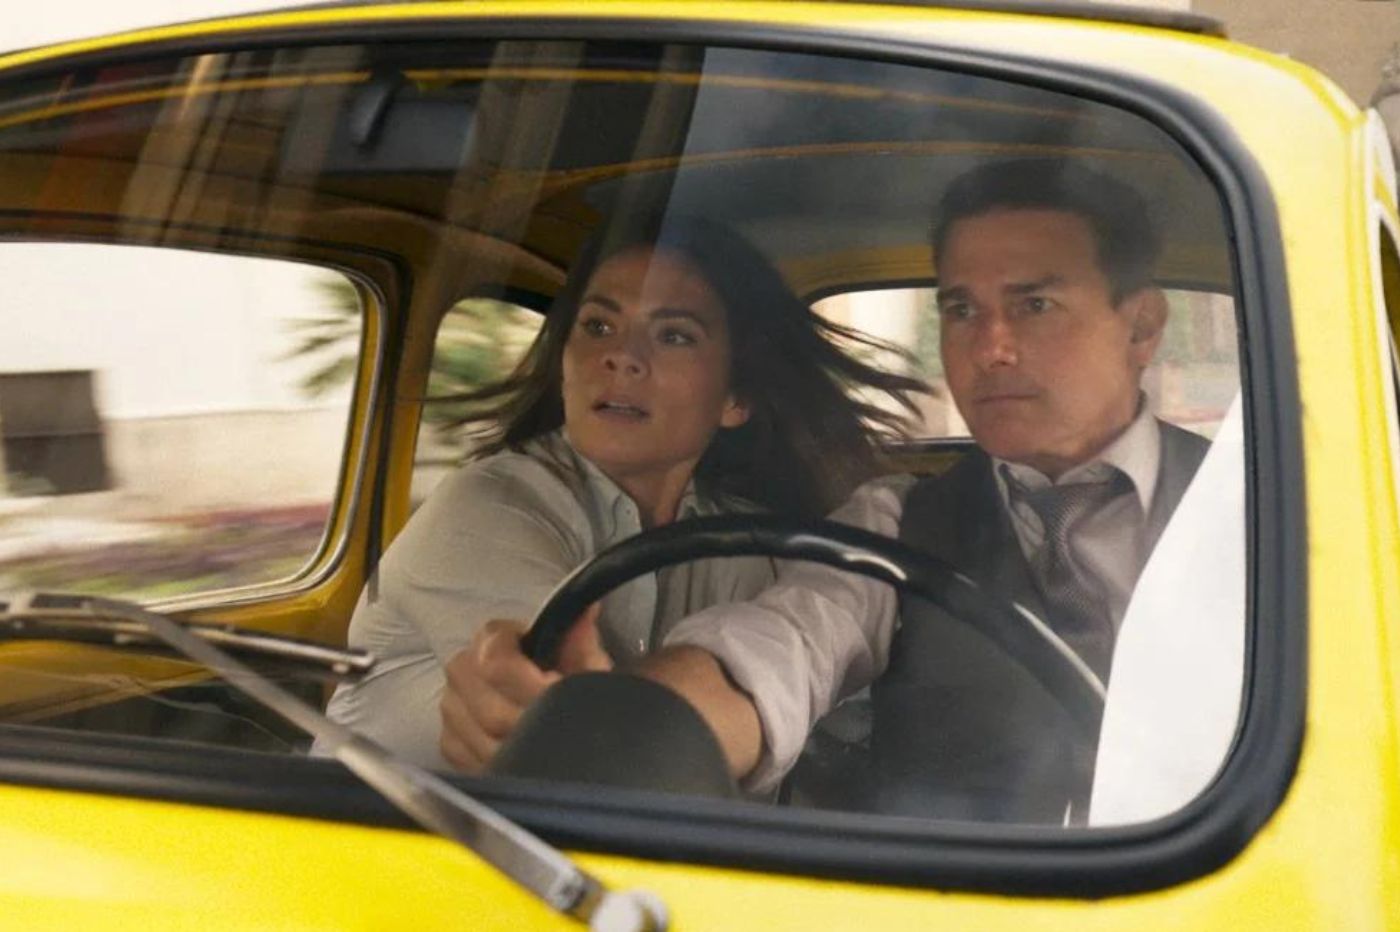 Mission Impossible Image du film dans une voiture avec Tom Cruise et Hayley Atwell